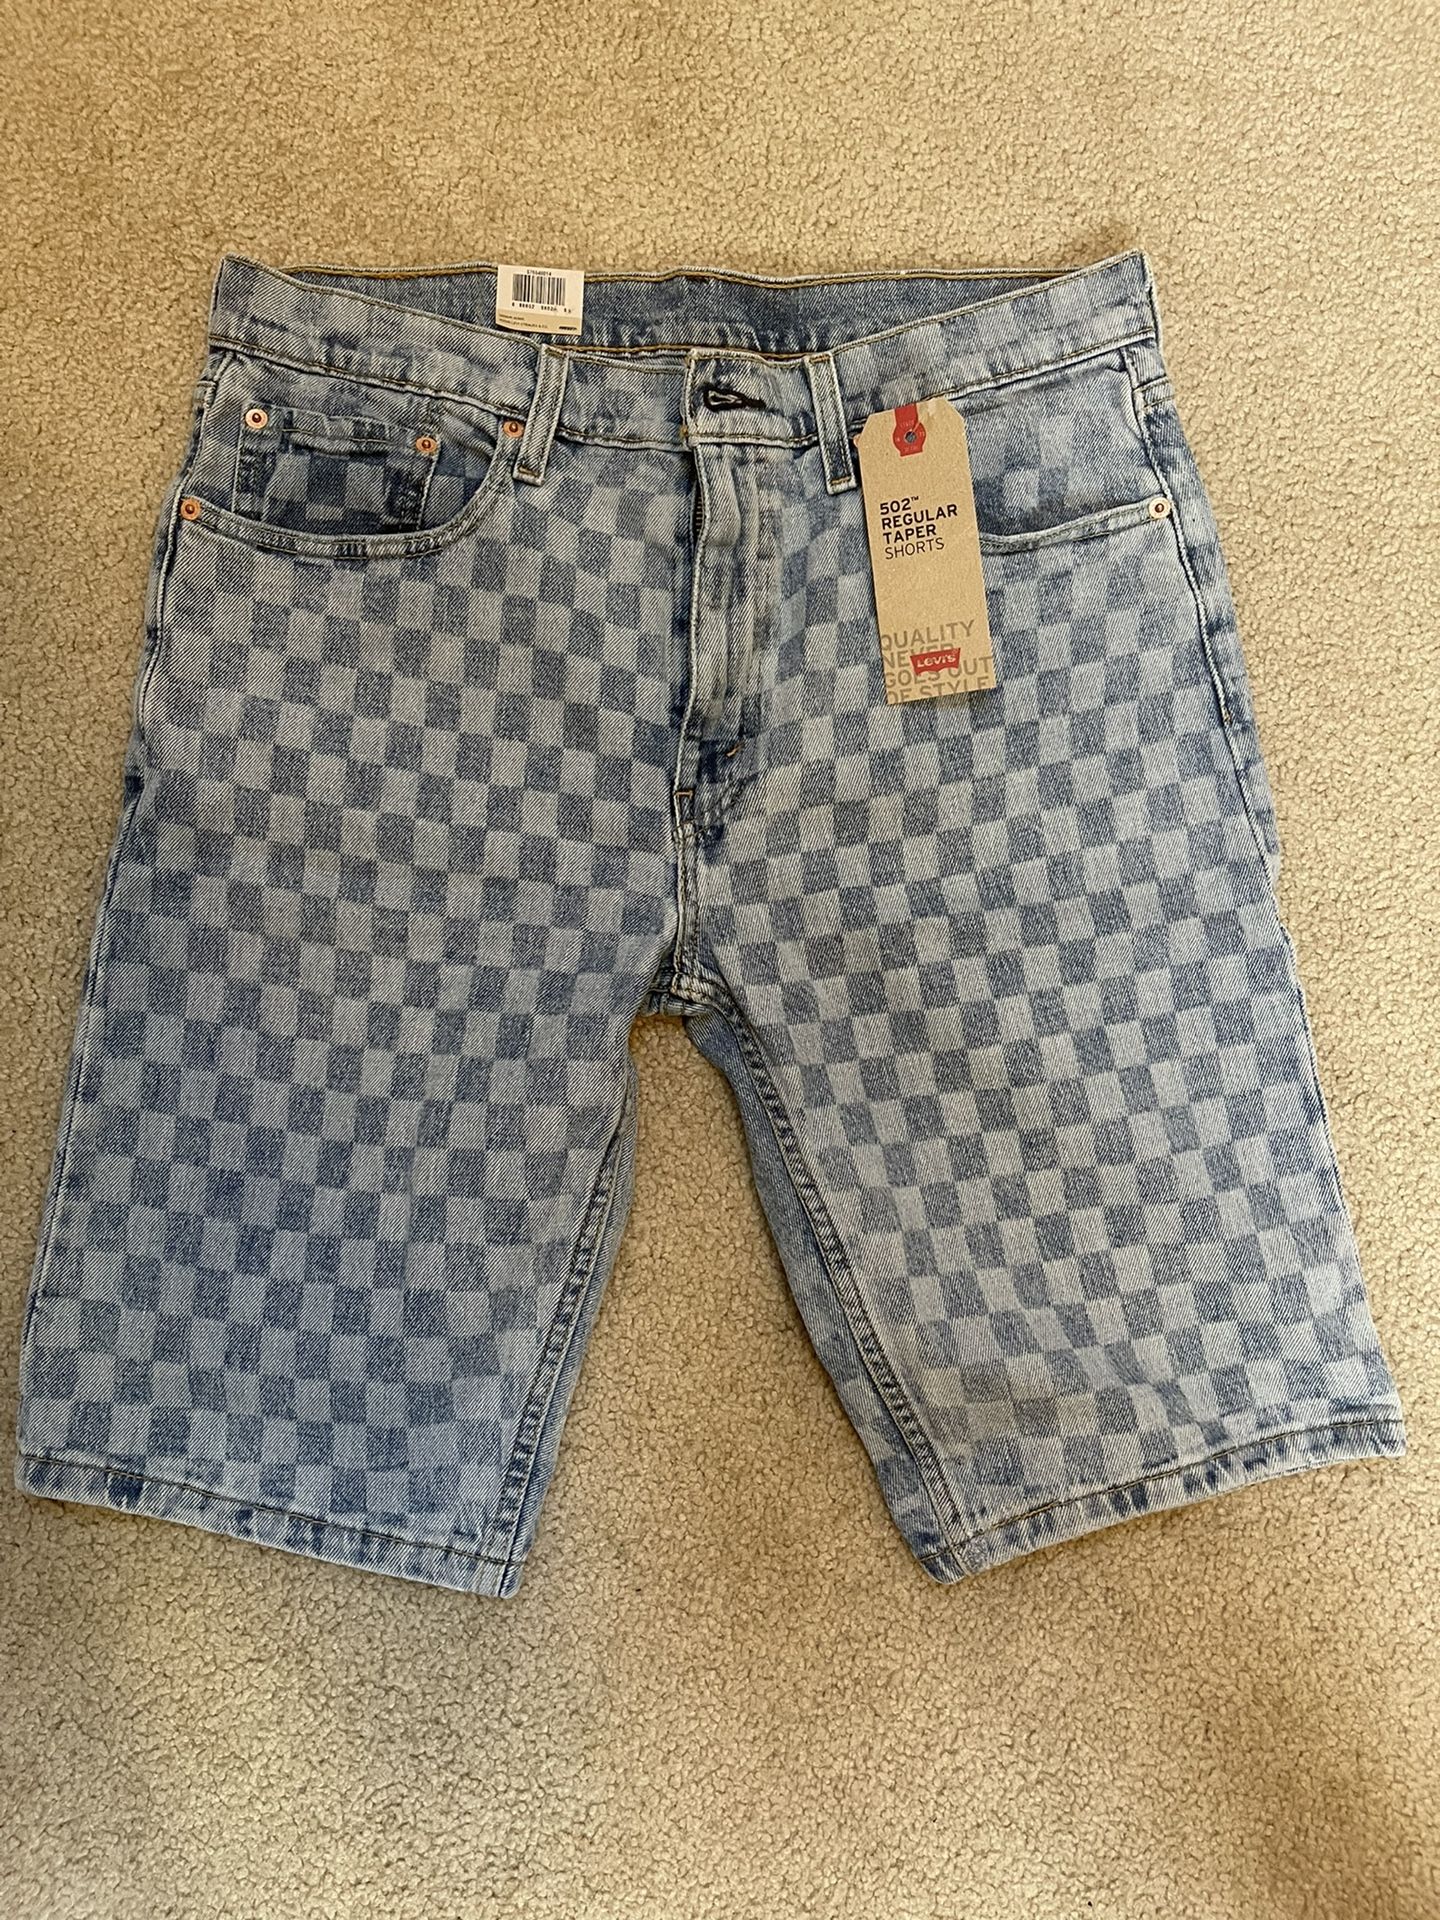 Checker Pattern Jean Shorts By Levi